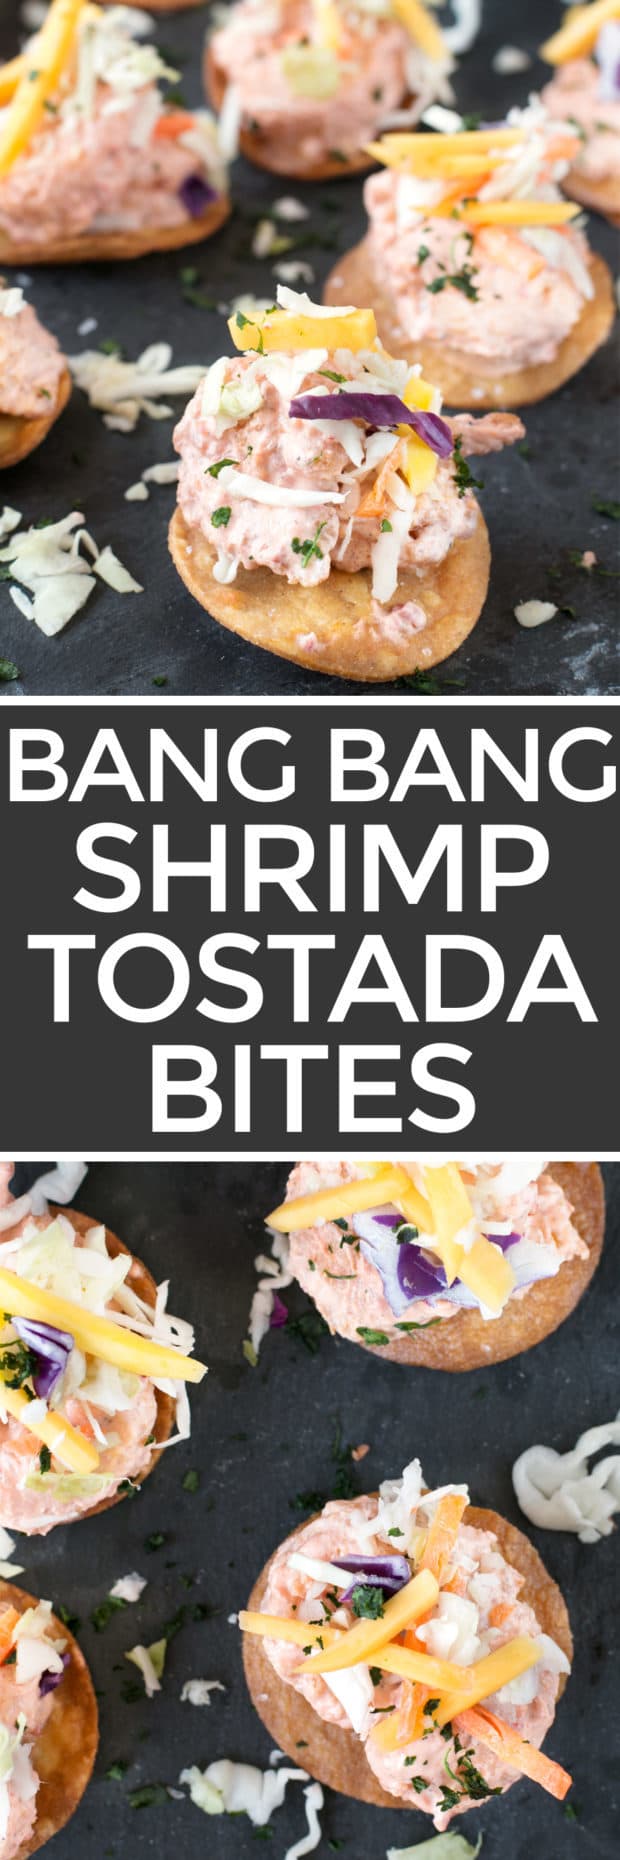 Bang Bang Shrimp Tostada Bites with Mango Slaw | cakenknife.com #appetizer #party #bangbangshrimp